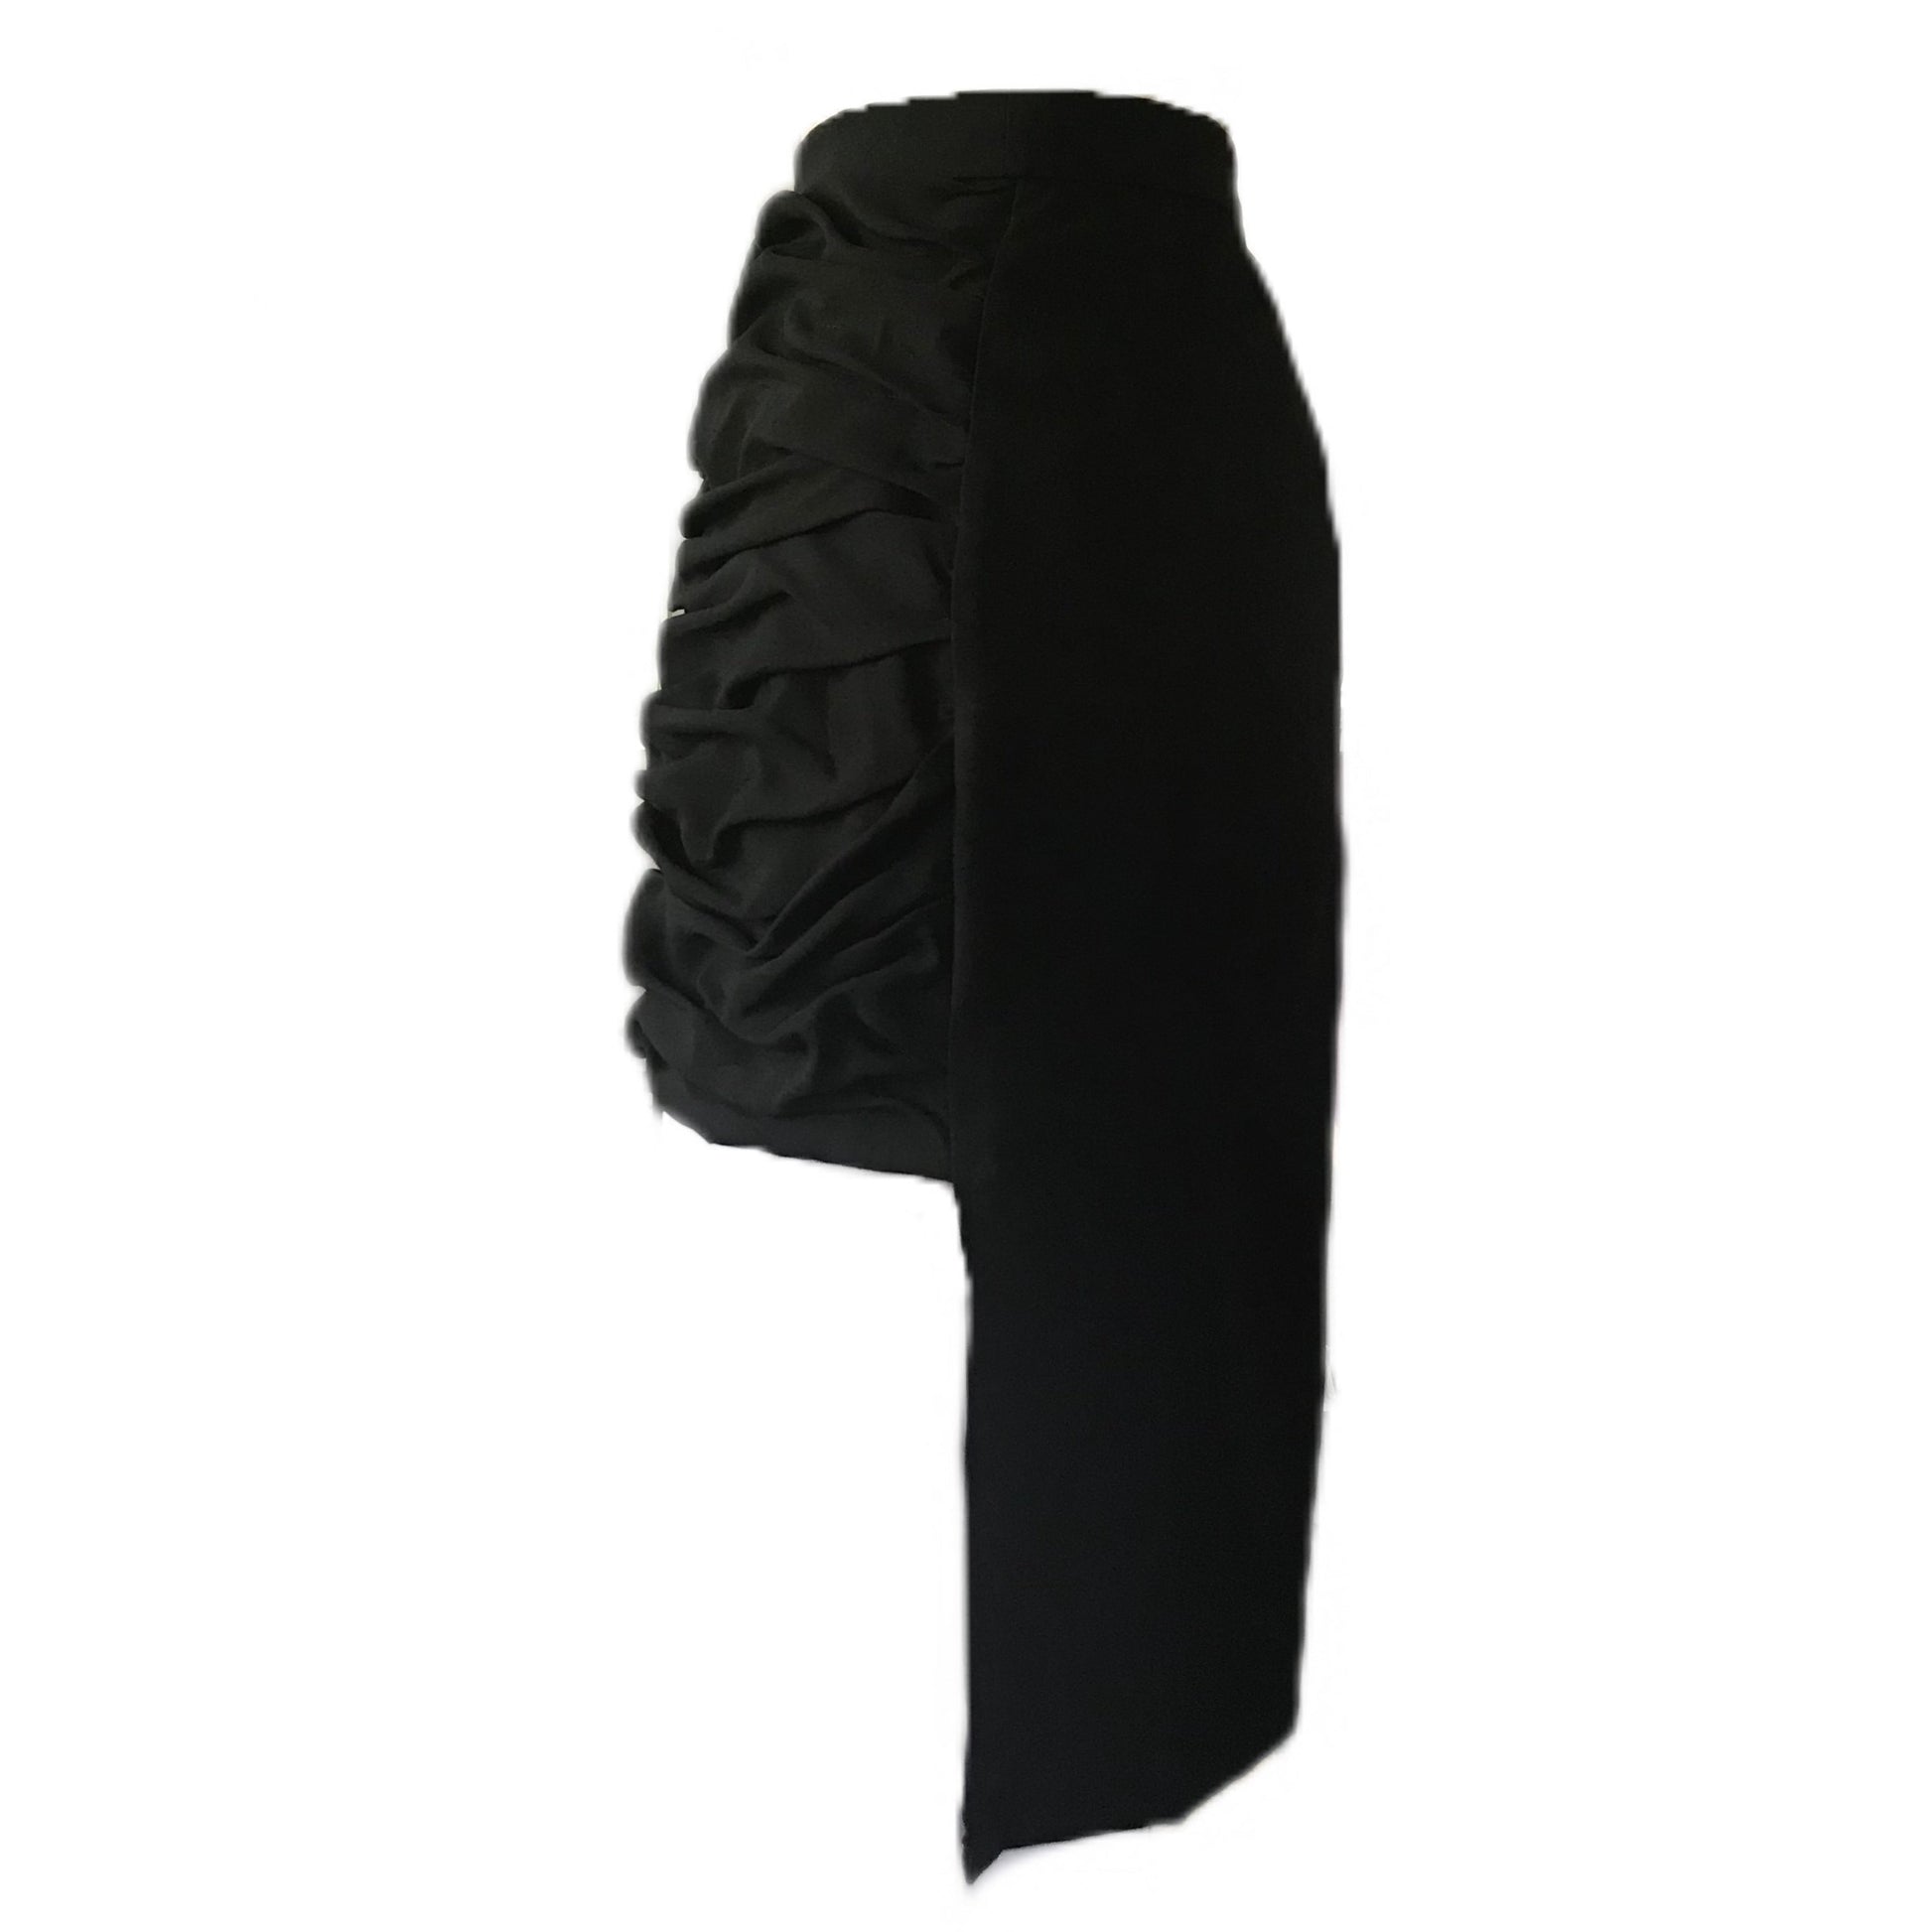 Women's Asymmetrical Pinched-Pleat Pencil Skirt - Sz. 8